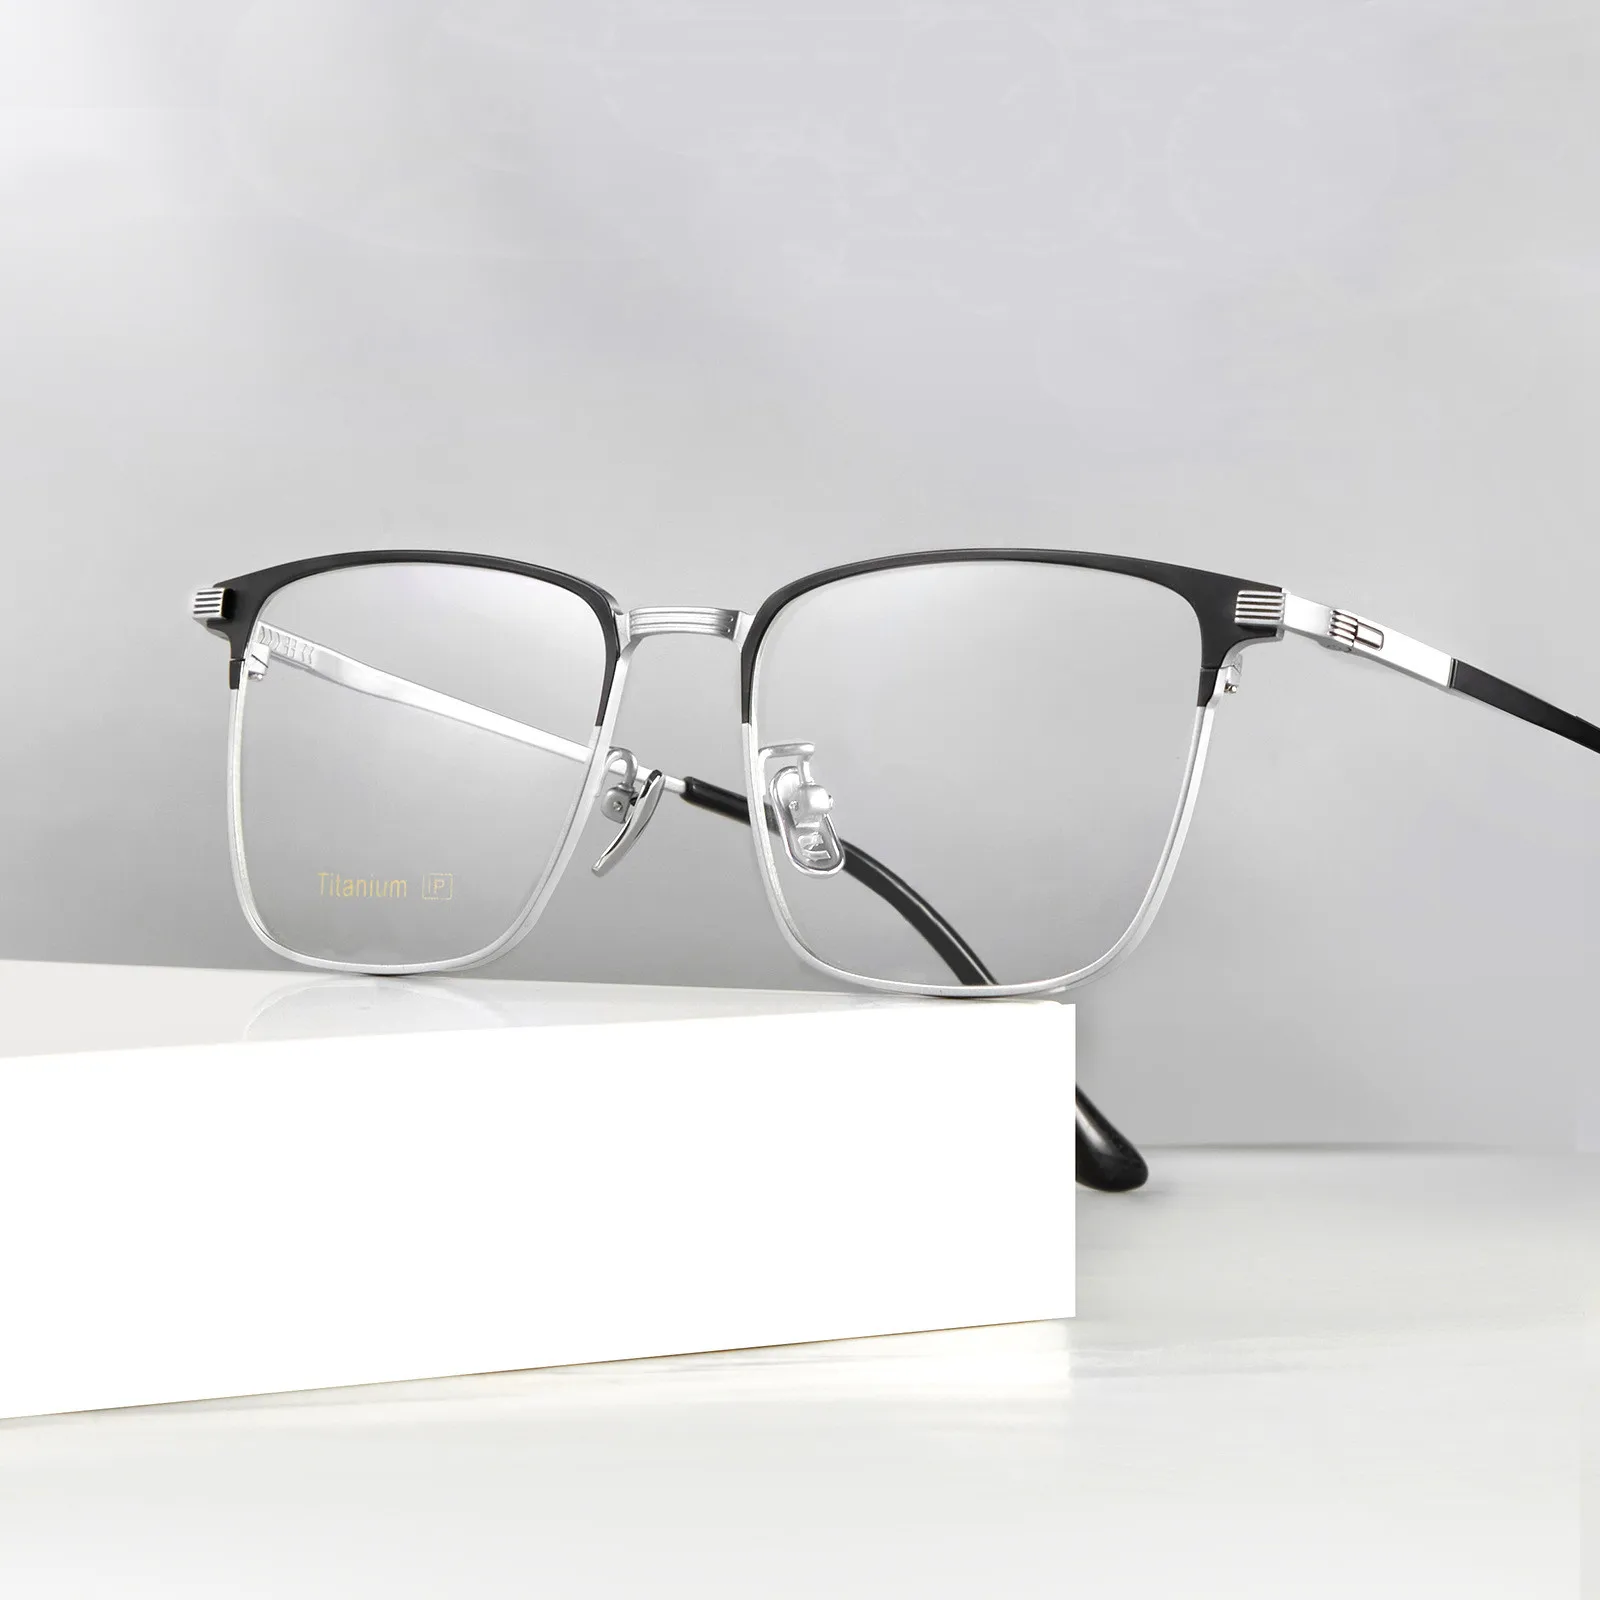 

Pure Titanium Business Eyeglasses Designed Optical Frame Prescription Spectacle Full Rim Glasses Long Temple 150mm